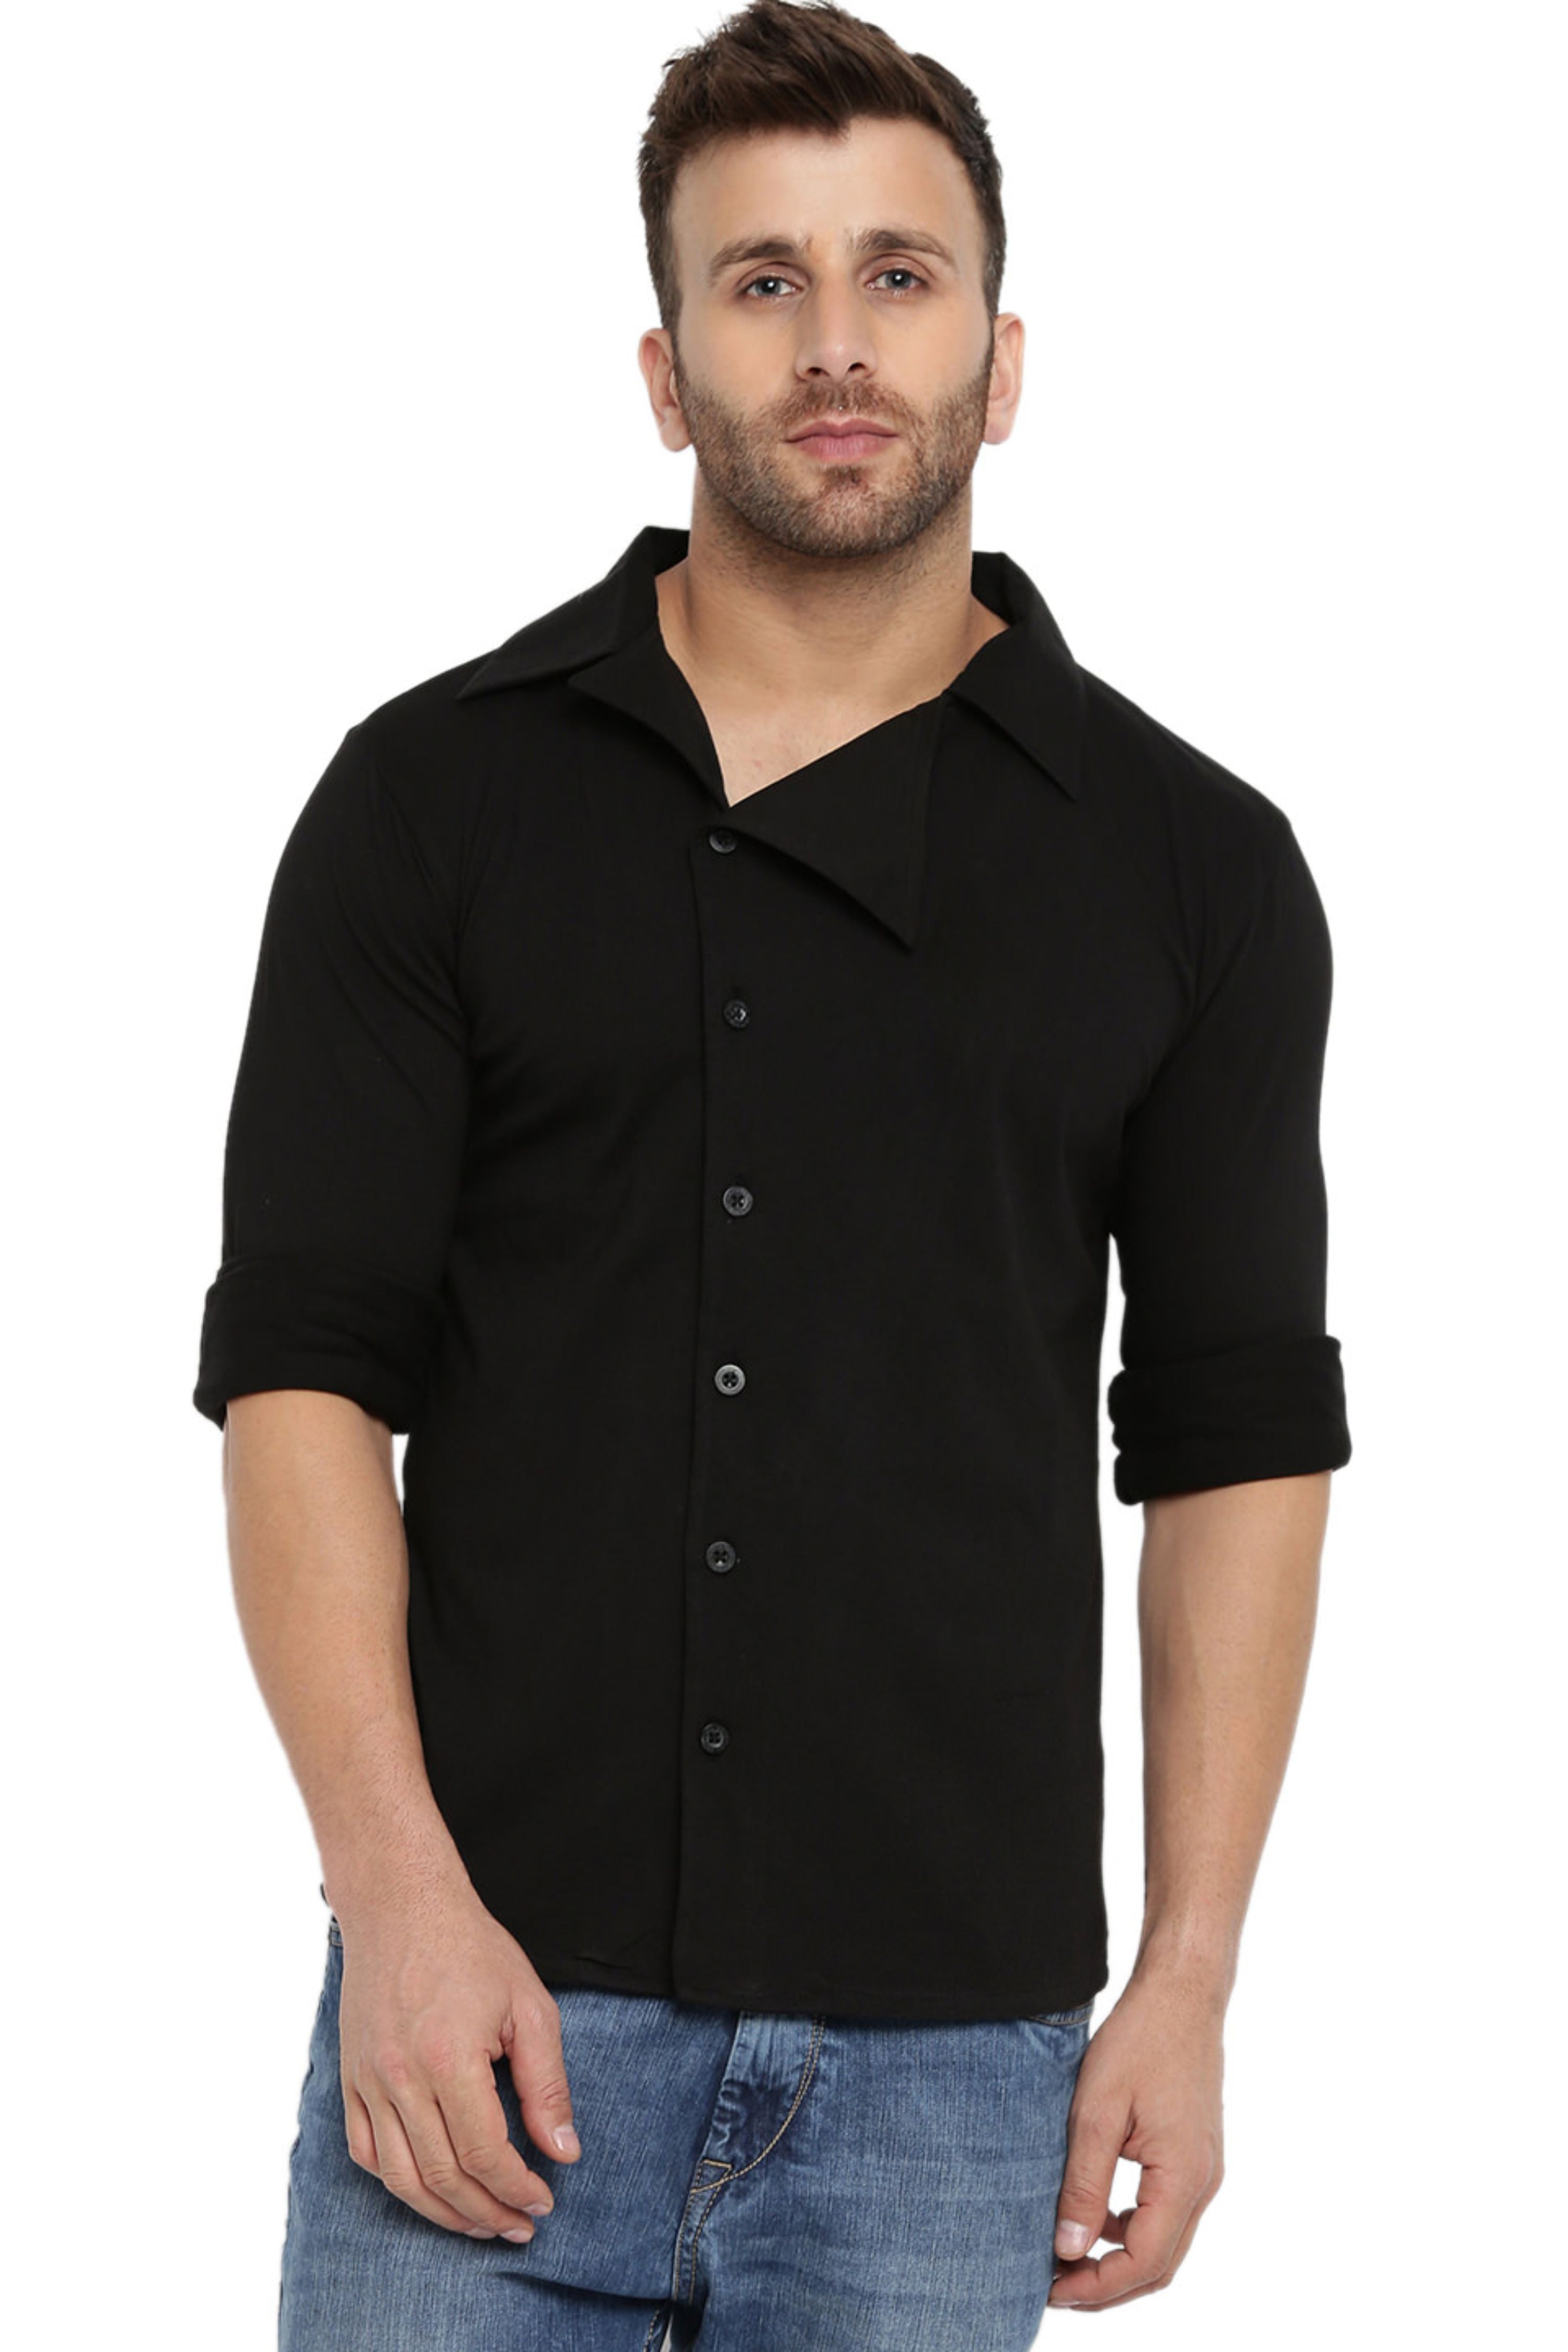 Black Side Placket Full Sleeves Knitted Shirt